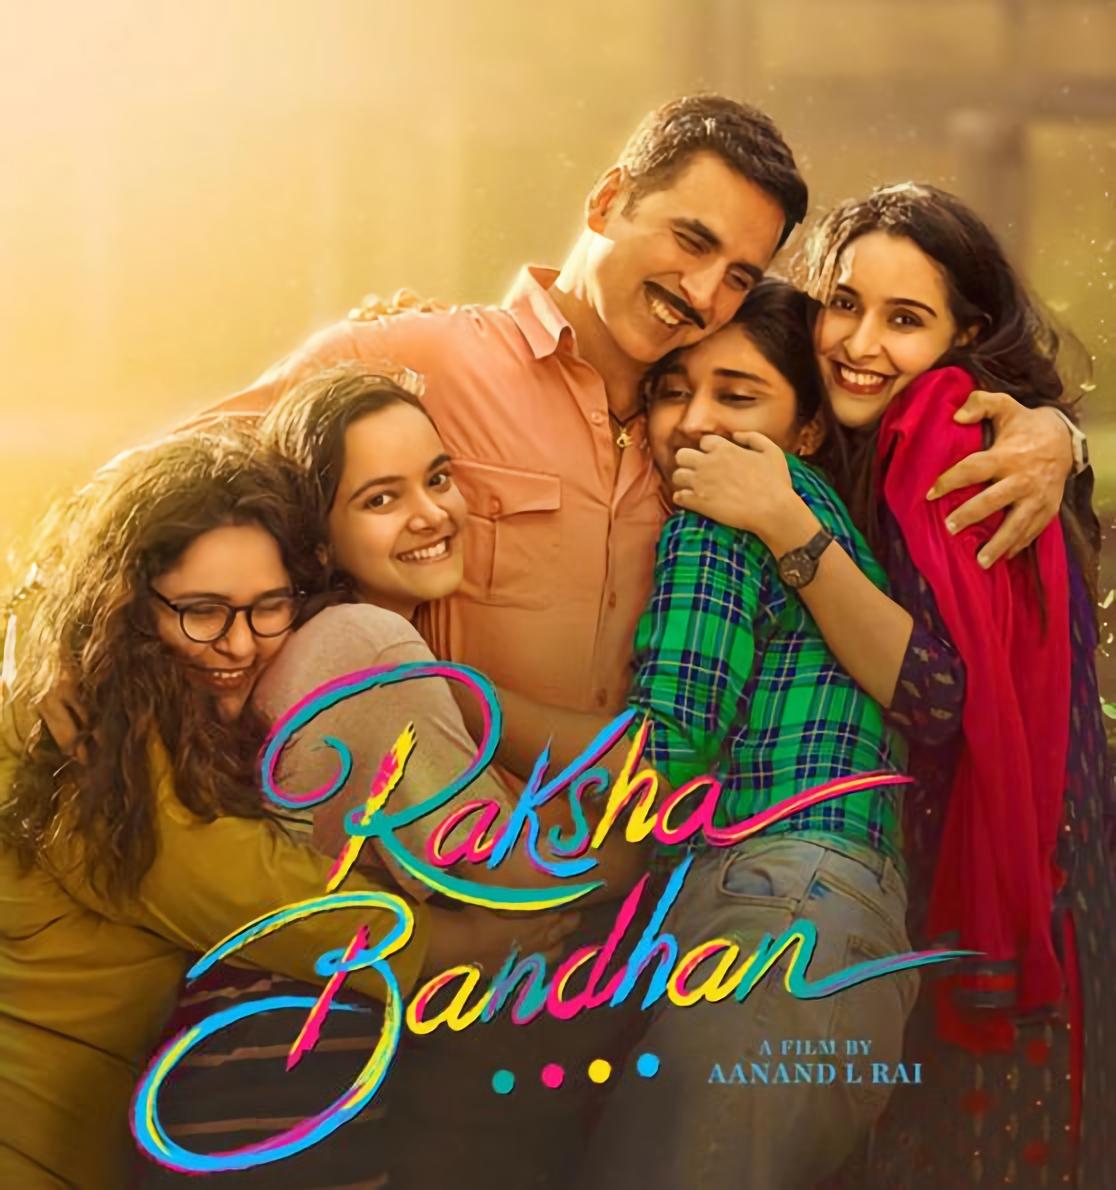 Raksha Bandhan Movie Ticket Offers - Up to Rs. 300 OFF 